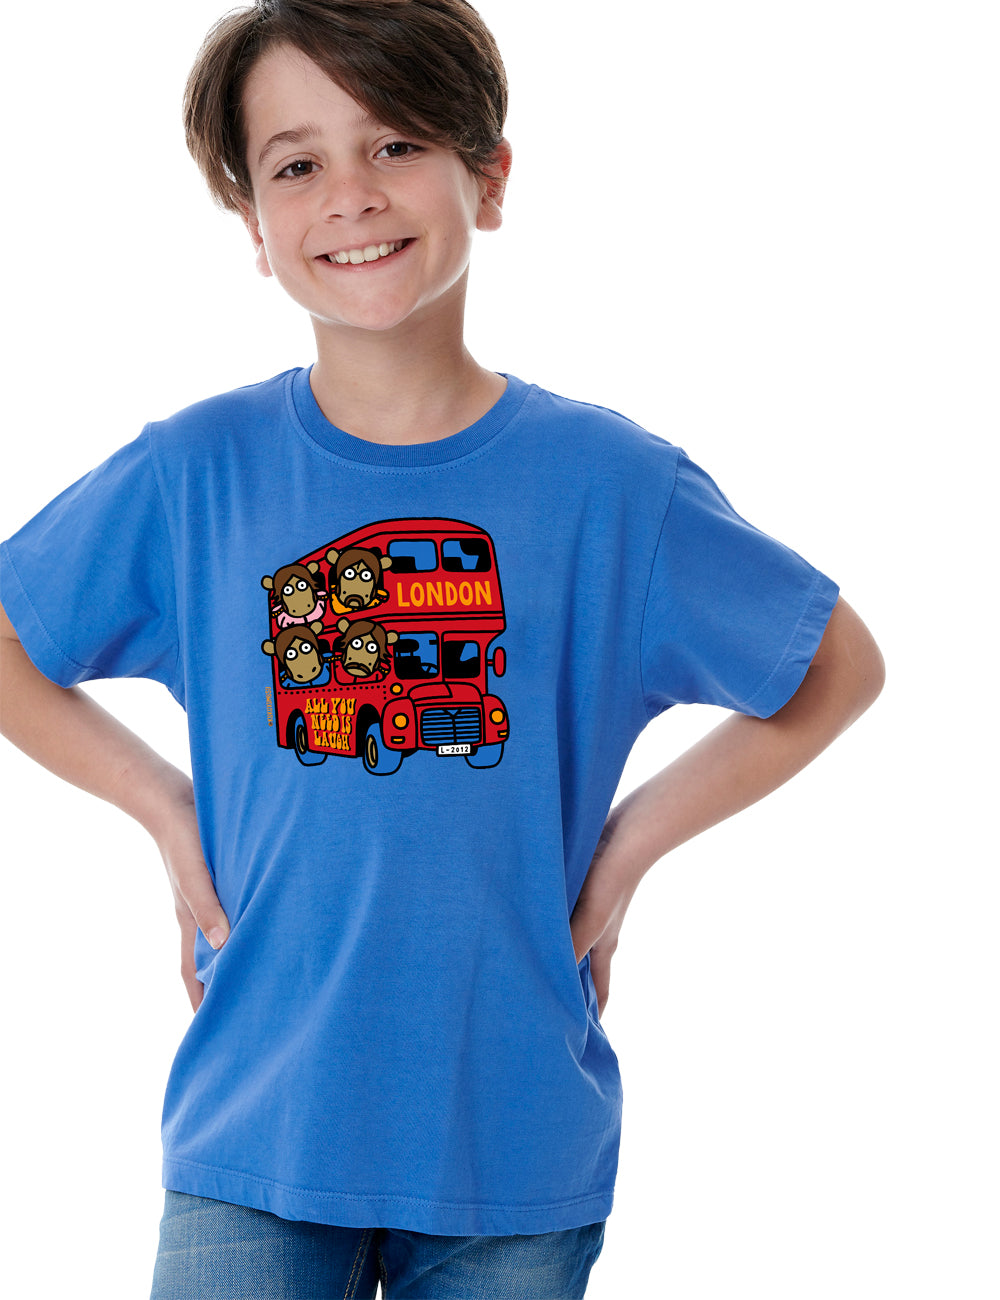 Beatlebus Kids T-Shirt